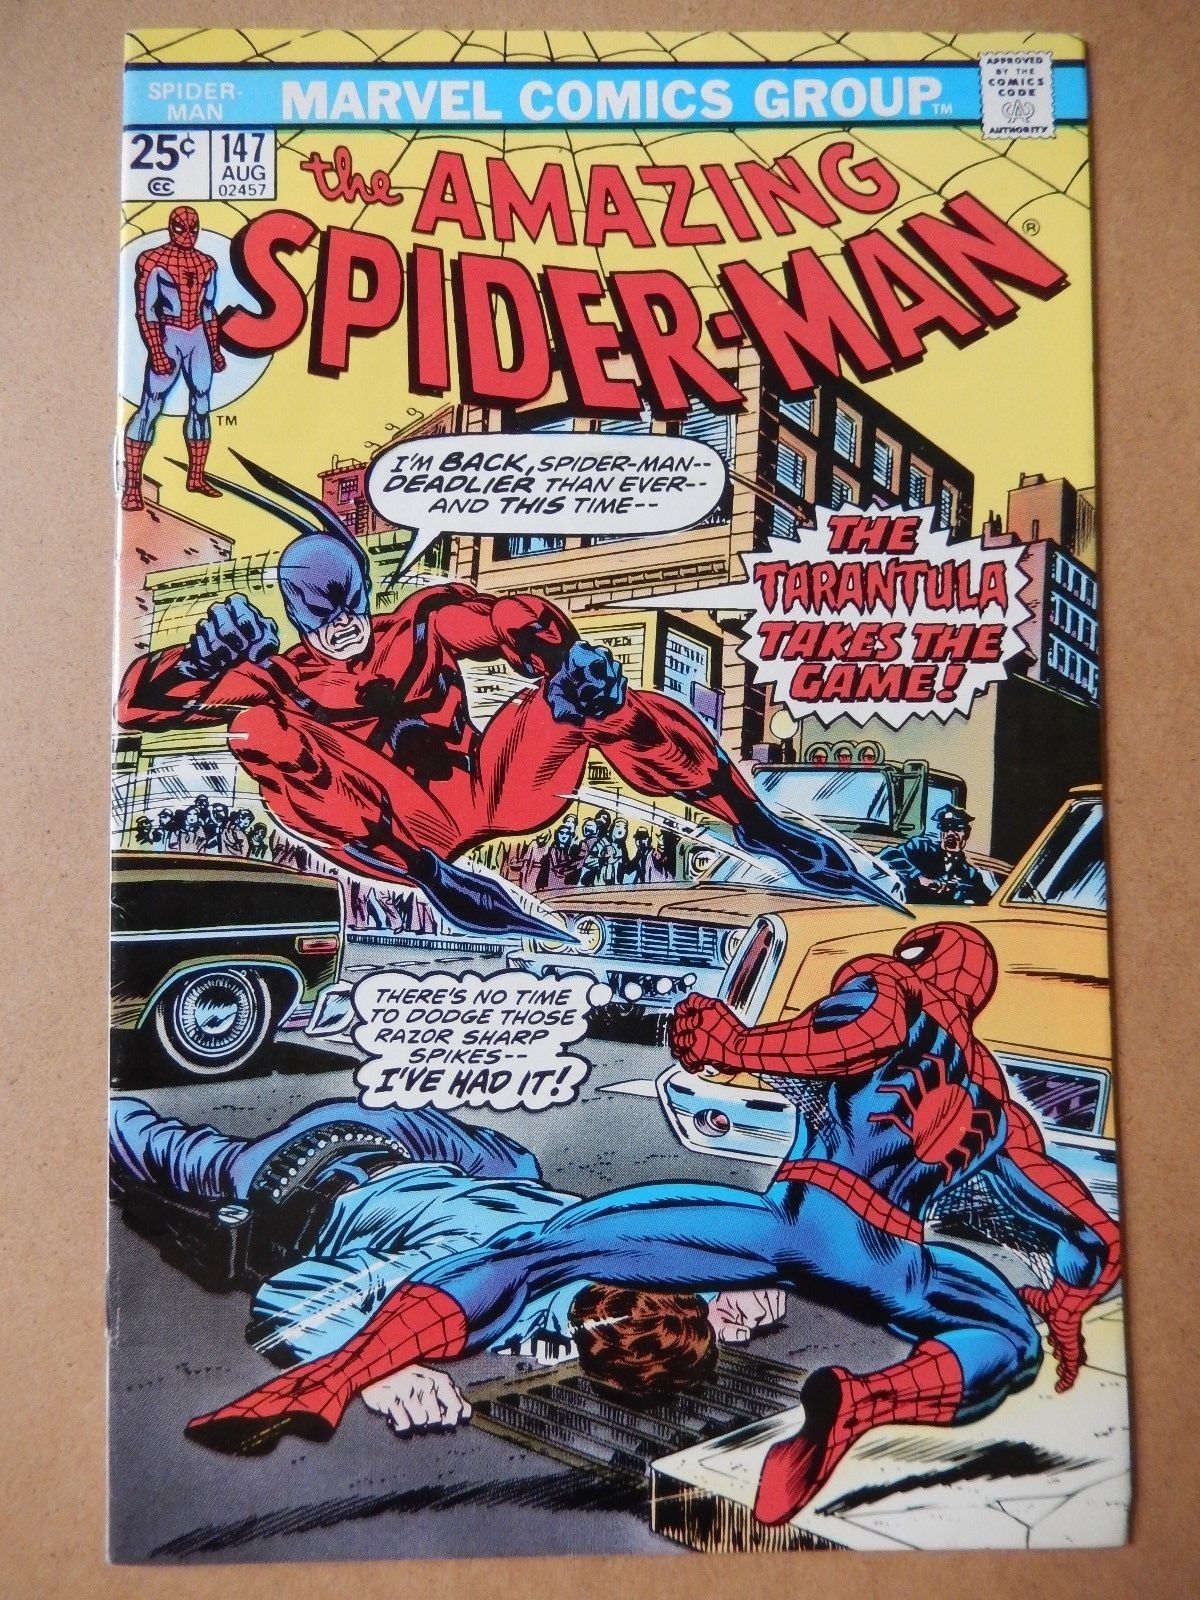 The Amazing Spider-Man #147 Gwen Stacy Clone Tarantula Nice Book John Romita